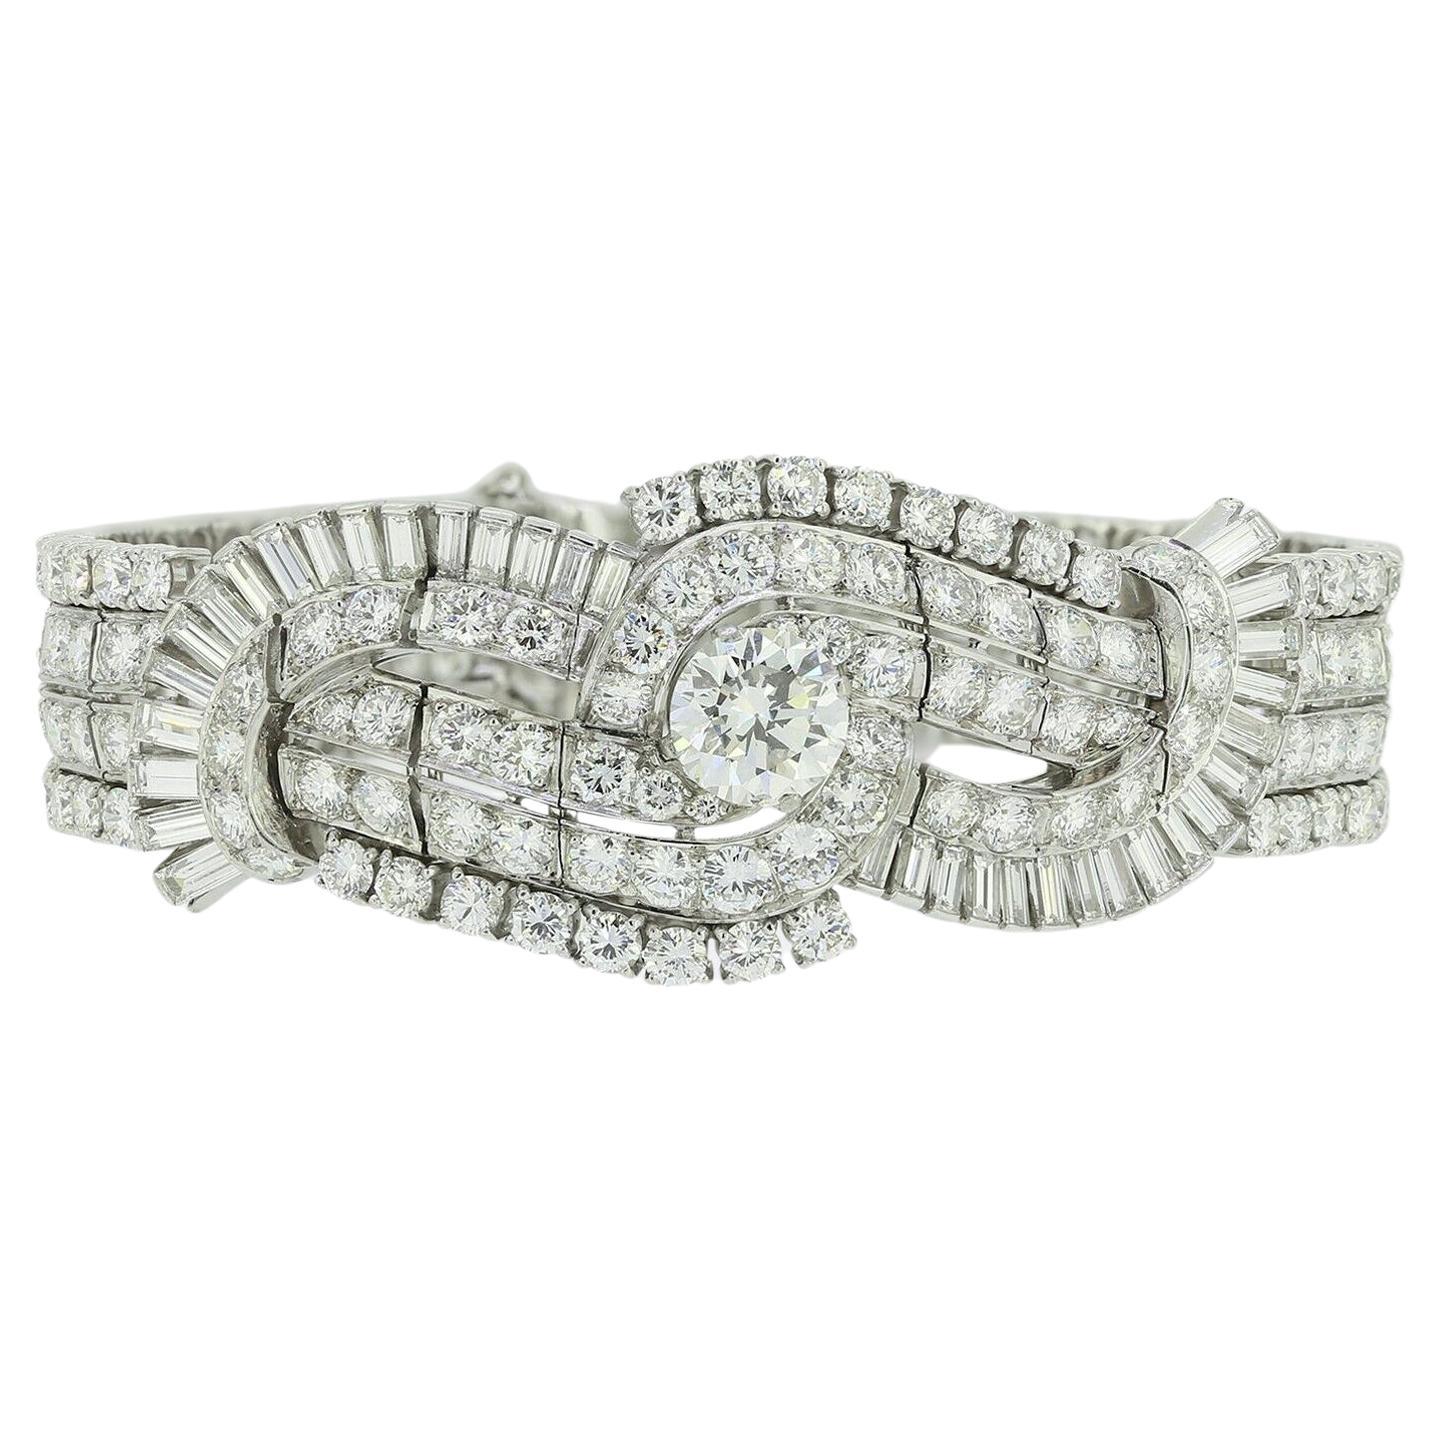 Vintage 23.00 Carat Diamond Bracelet